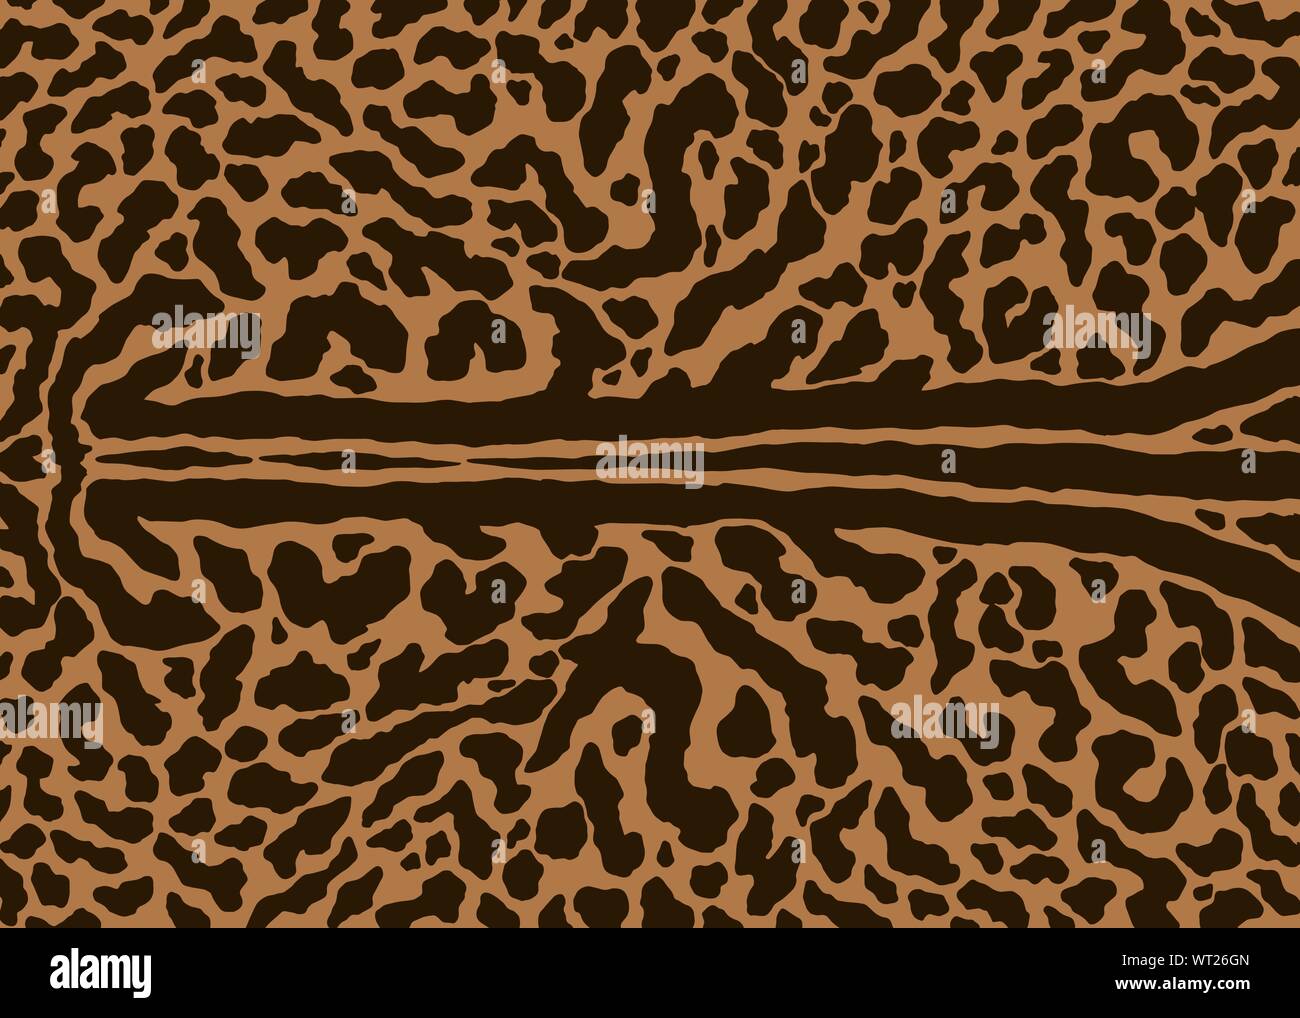 King cheetah skin pattern design. Cheetah spots print vector illustration background. Wildlife fur skin design illustration for print, web, home decor Stock Vector